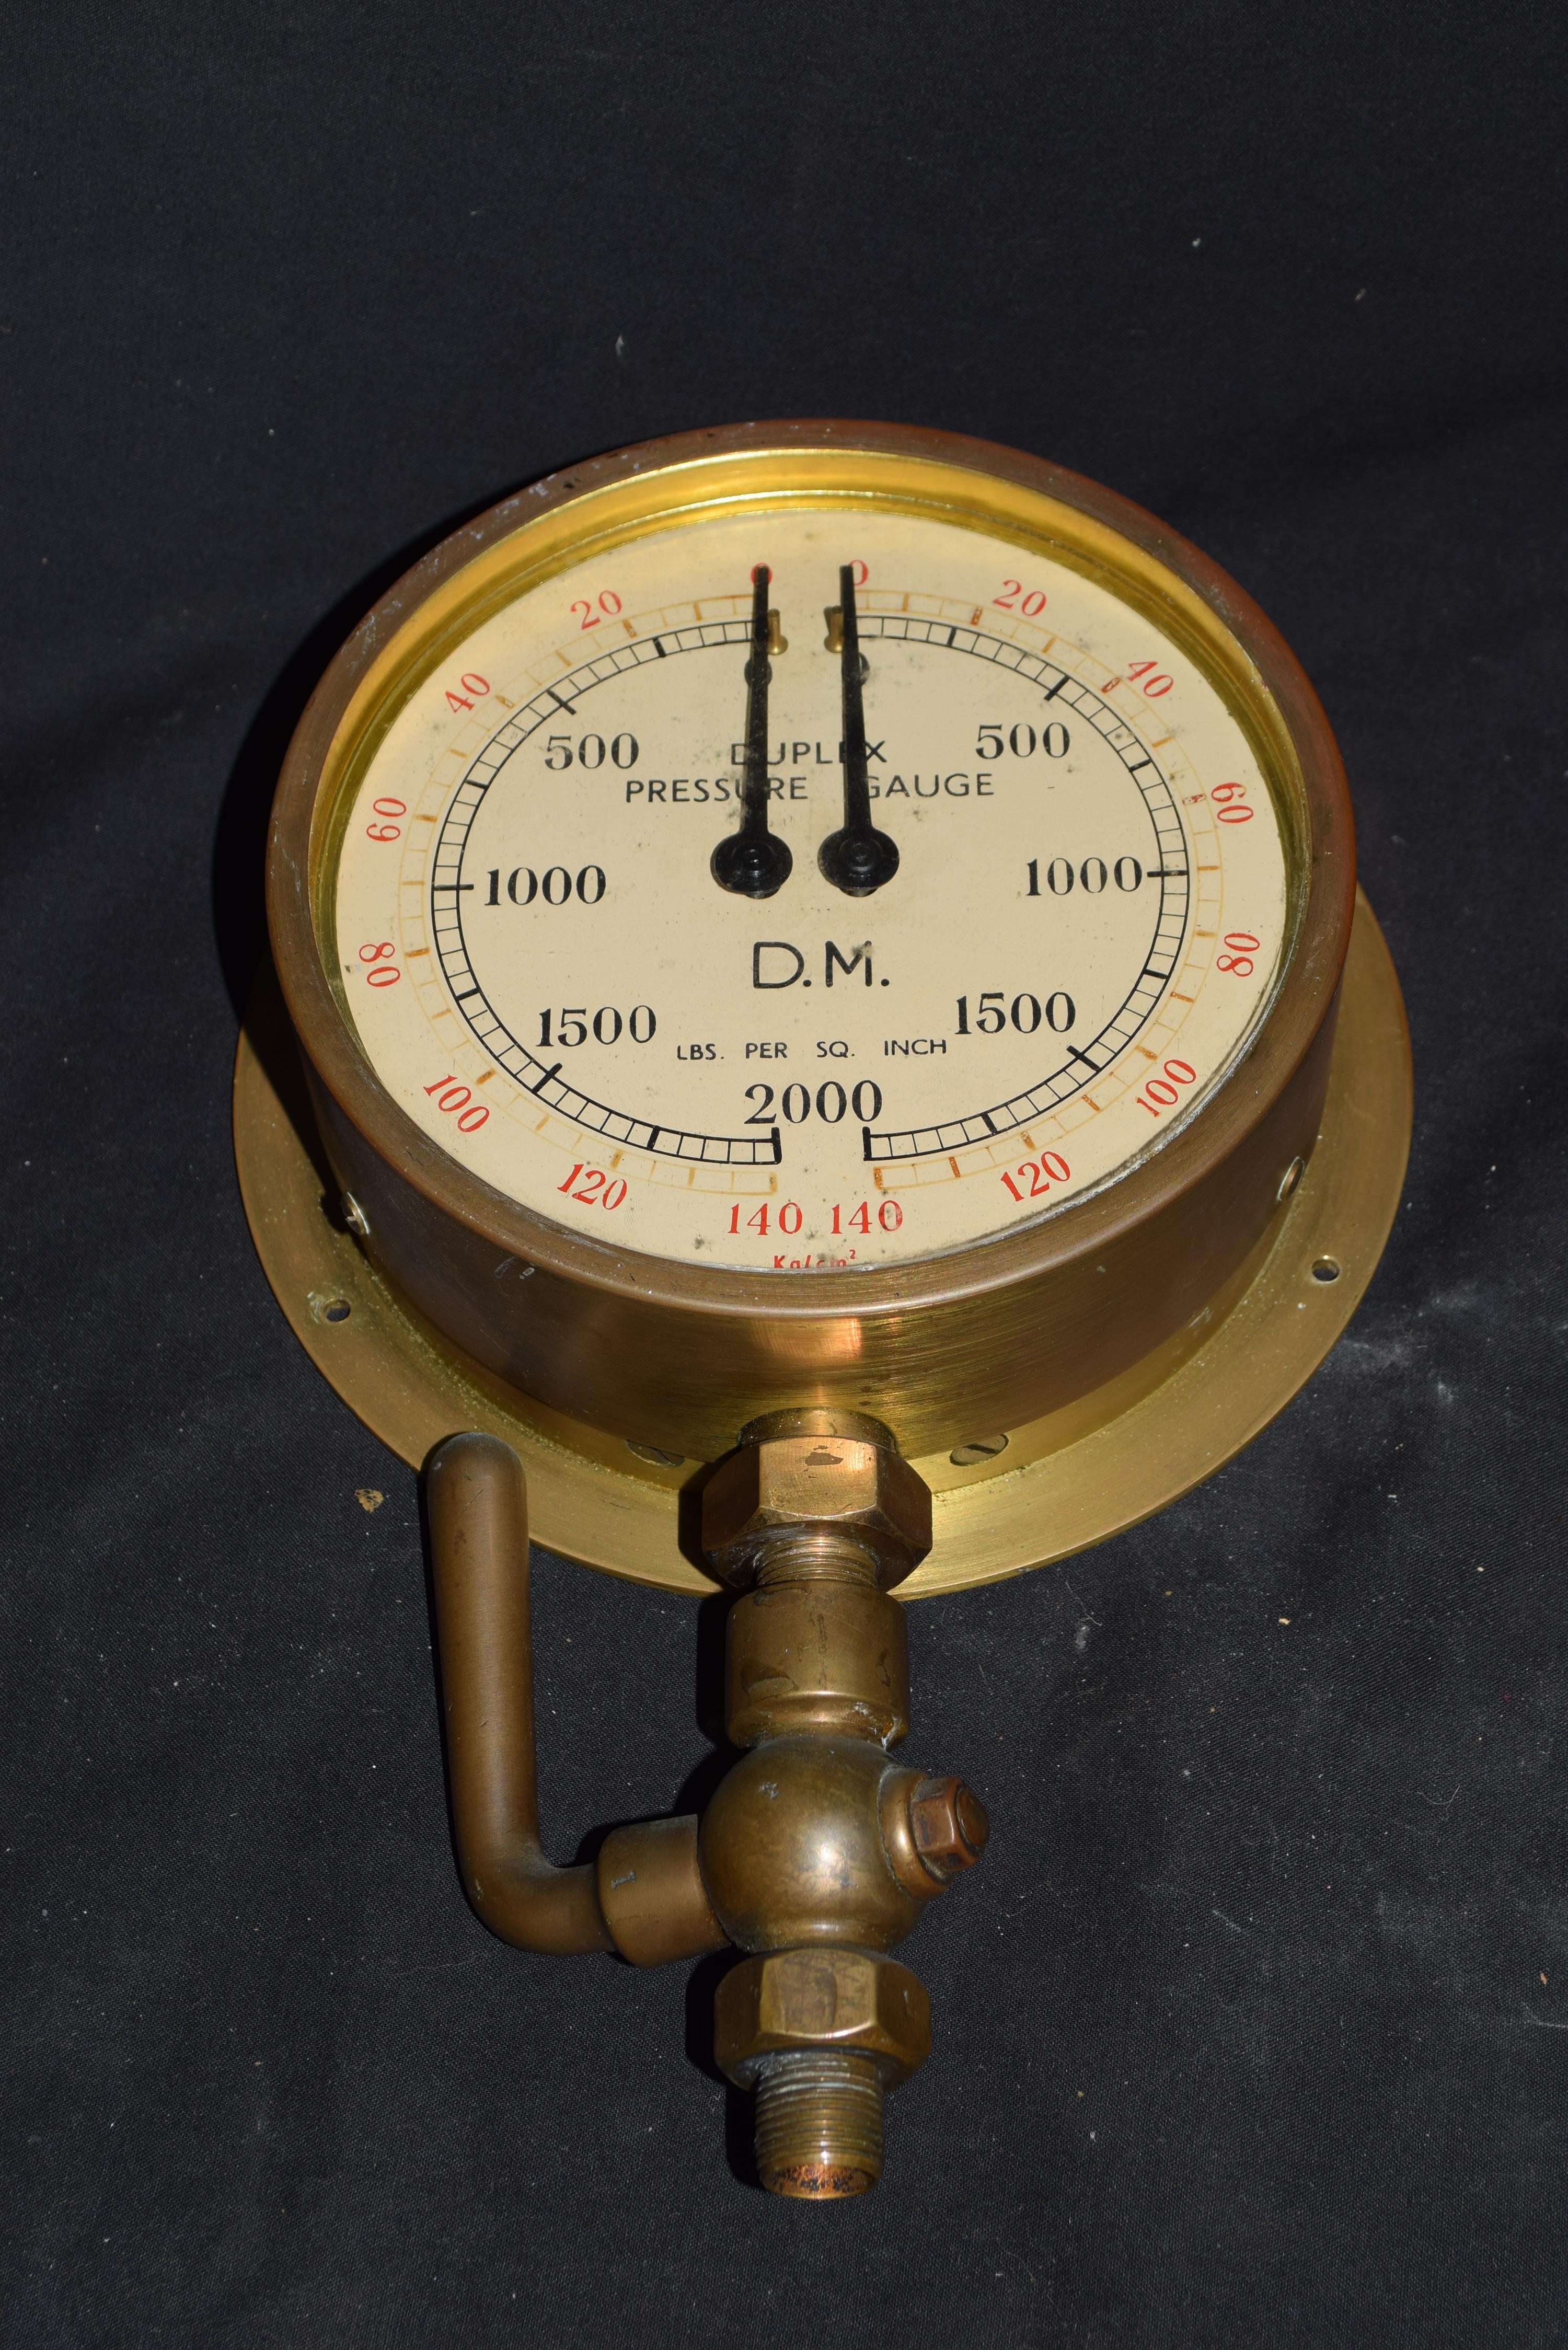 Duplex pressure gauge in circular brass case measuring pounds per square inch and kilograms per